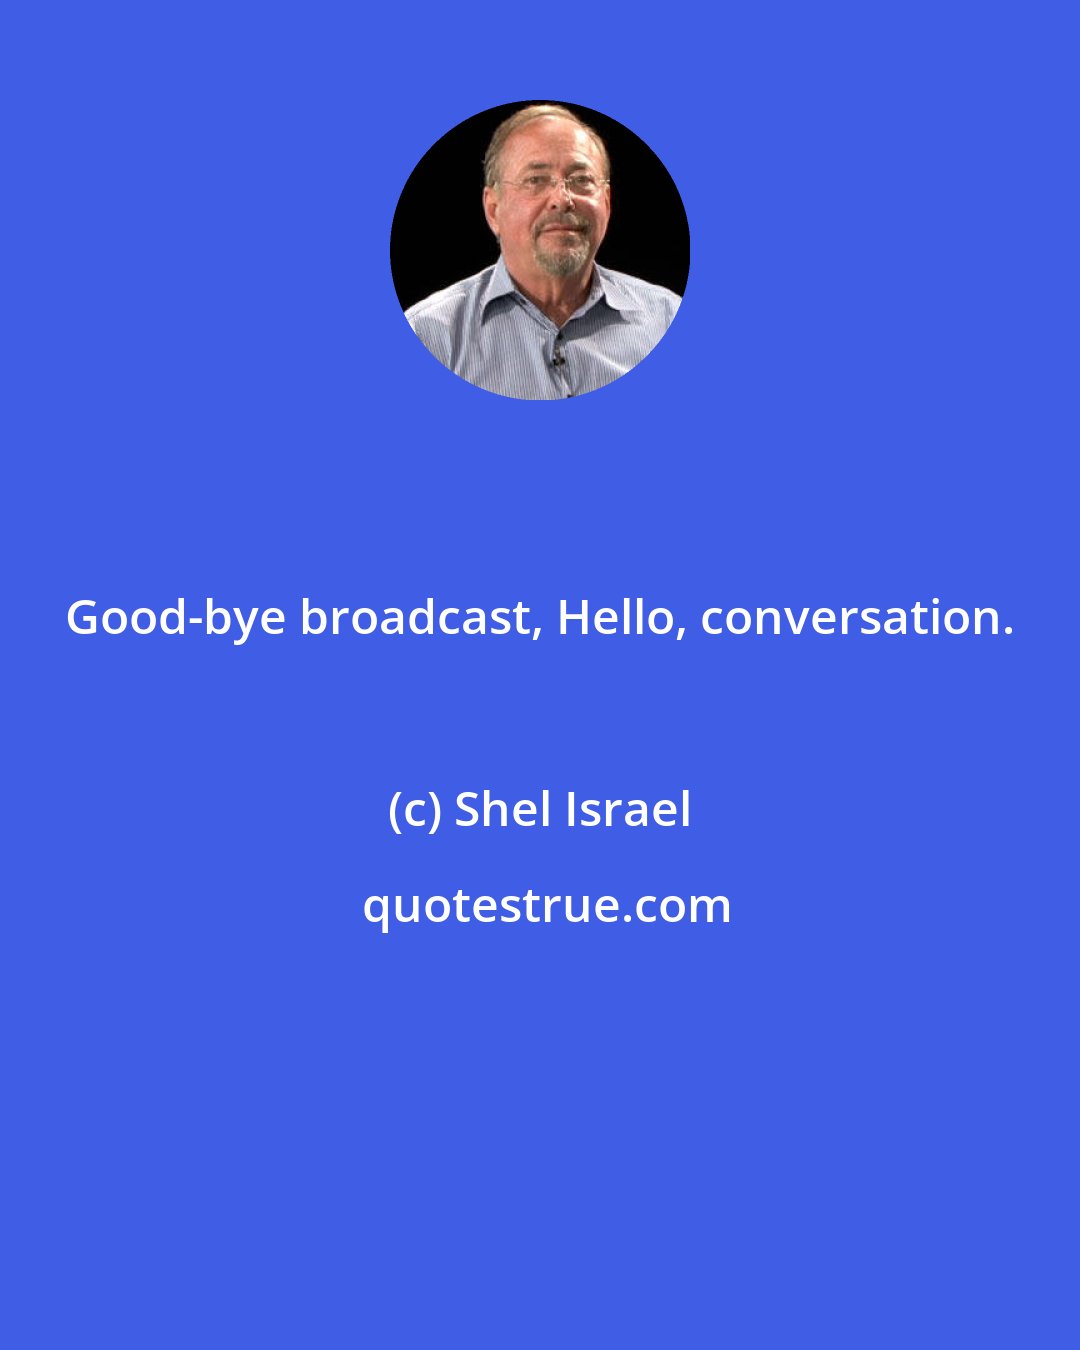 Shel Israel: Good-bye broadcast, Hello, conversation.